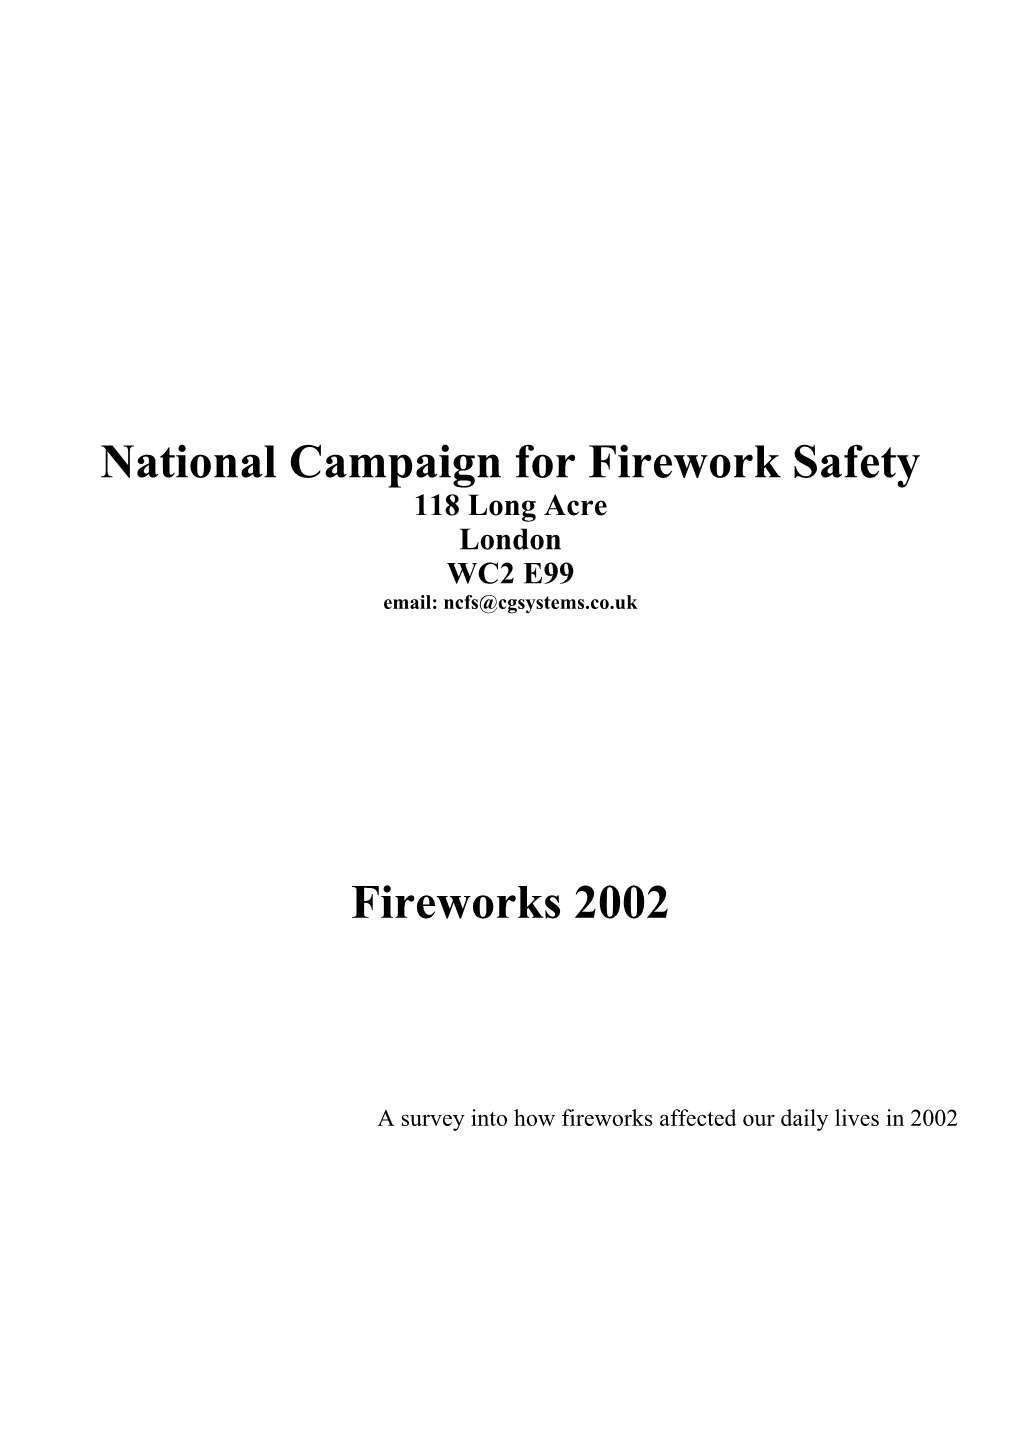 Fireworks 2002 Survey